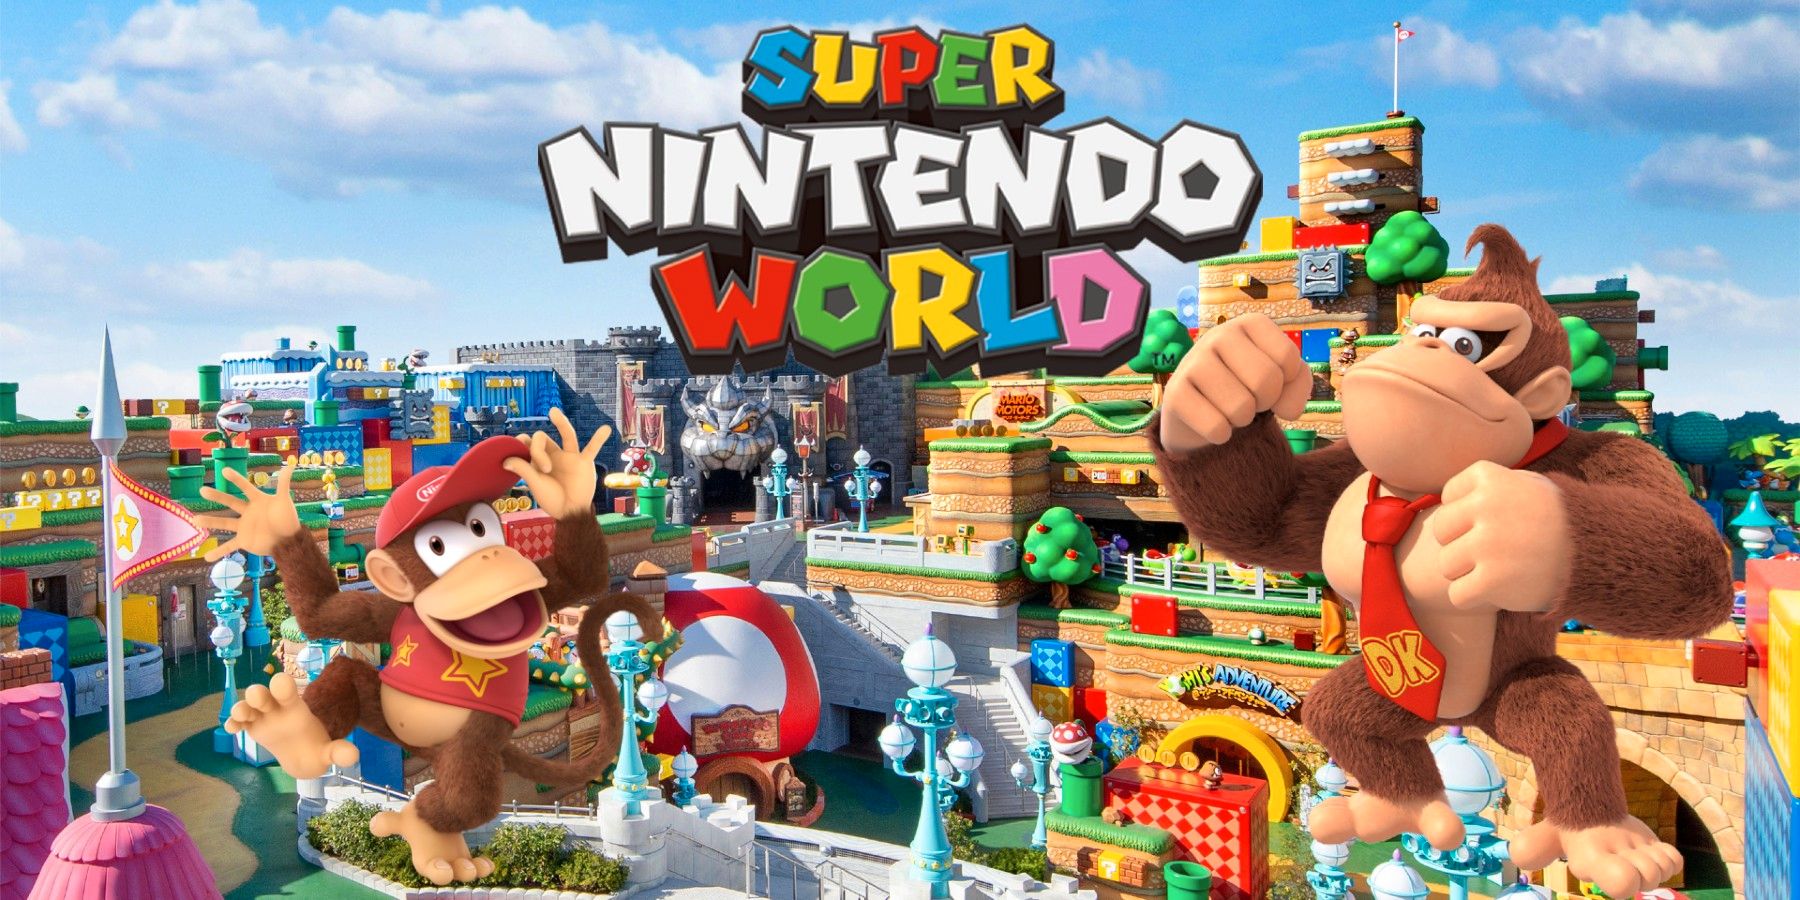 Super Nintendo World confirme l’expansion de Donkey Kong